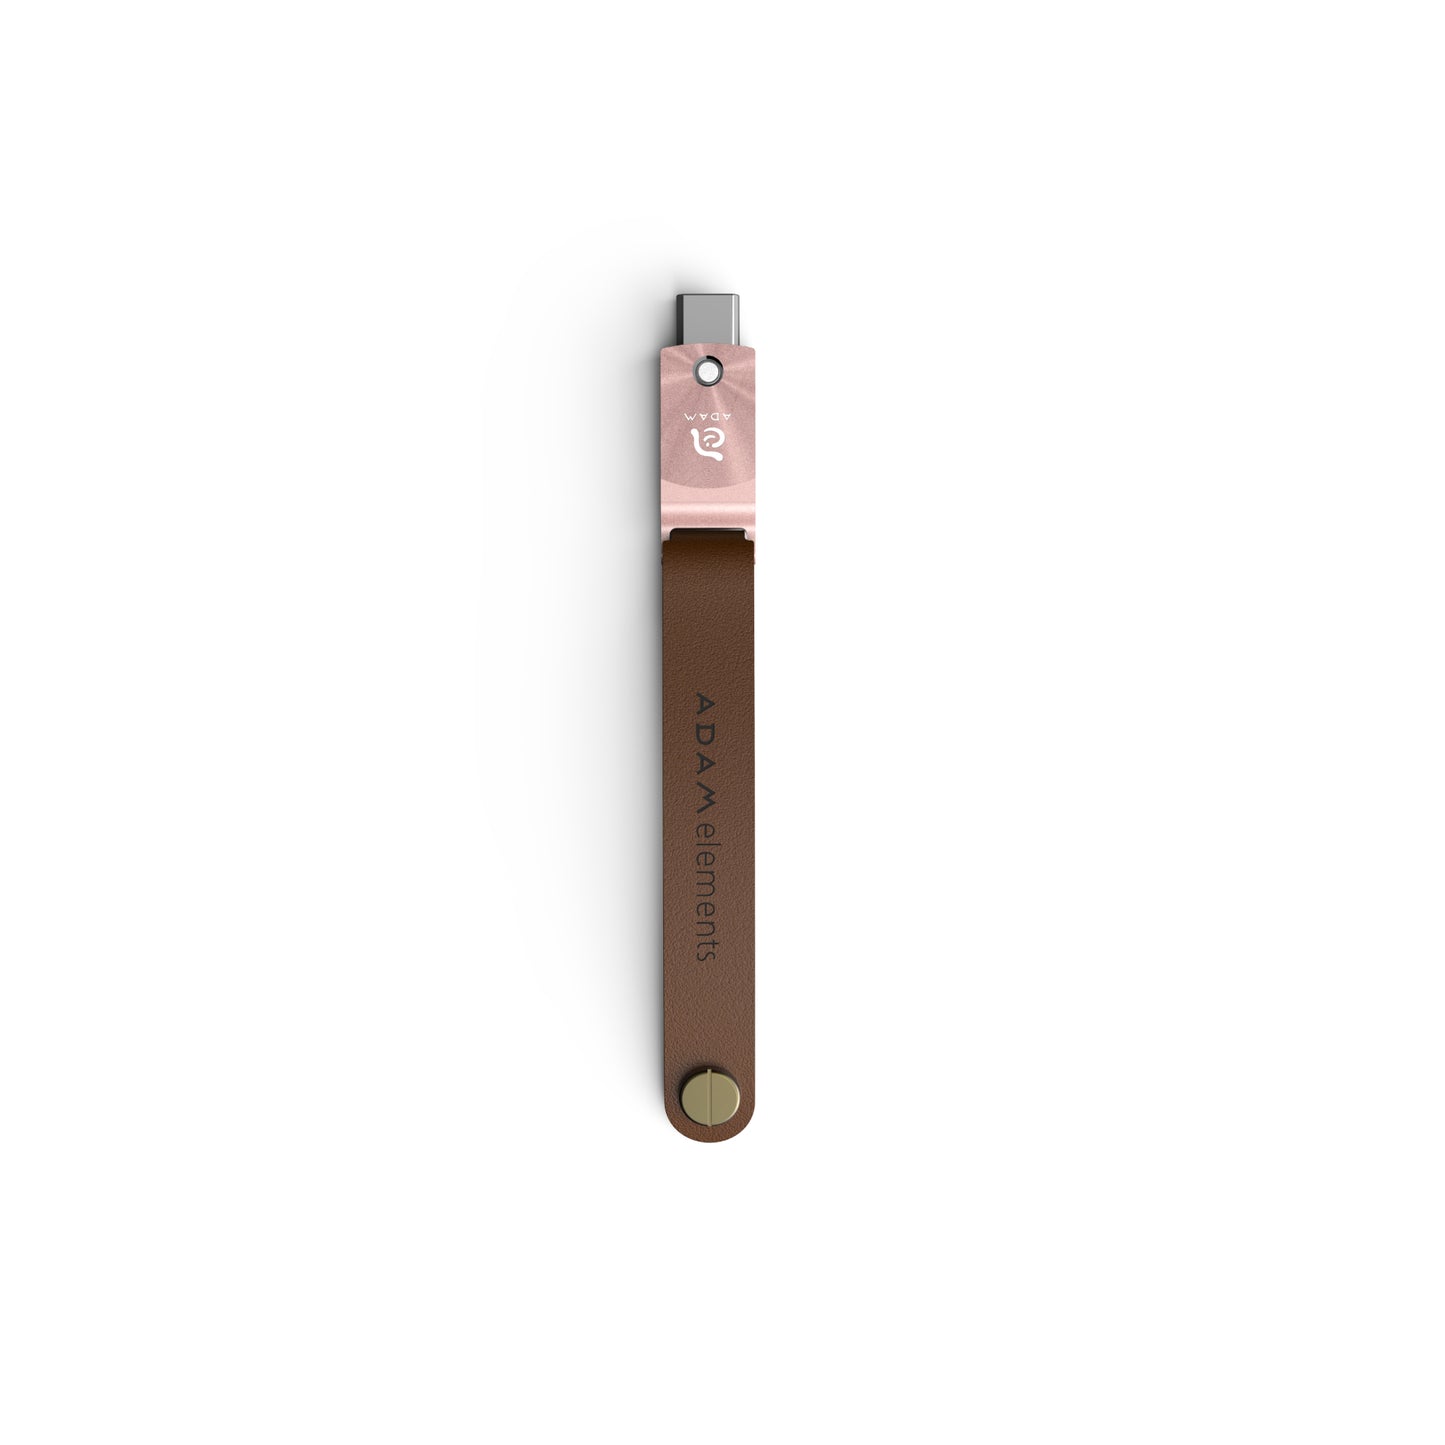 ADAM ELEMENTS Roma USB C to USB 3.0 OTG 64GB Flash Drive - Rose Gold